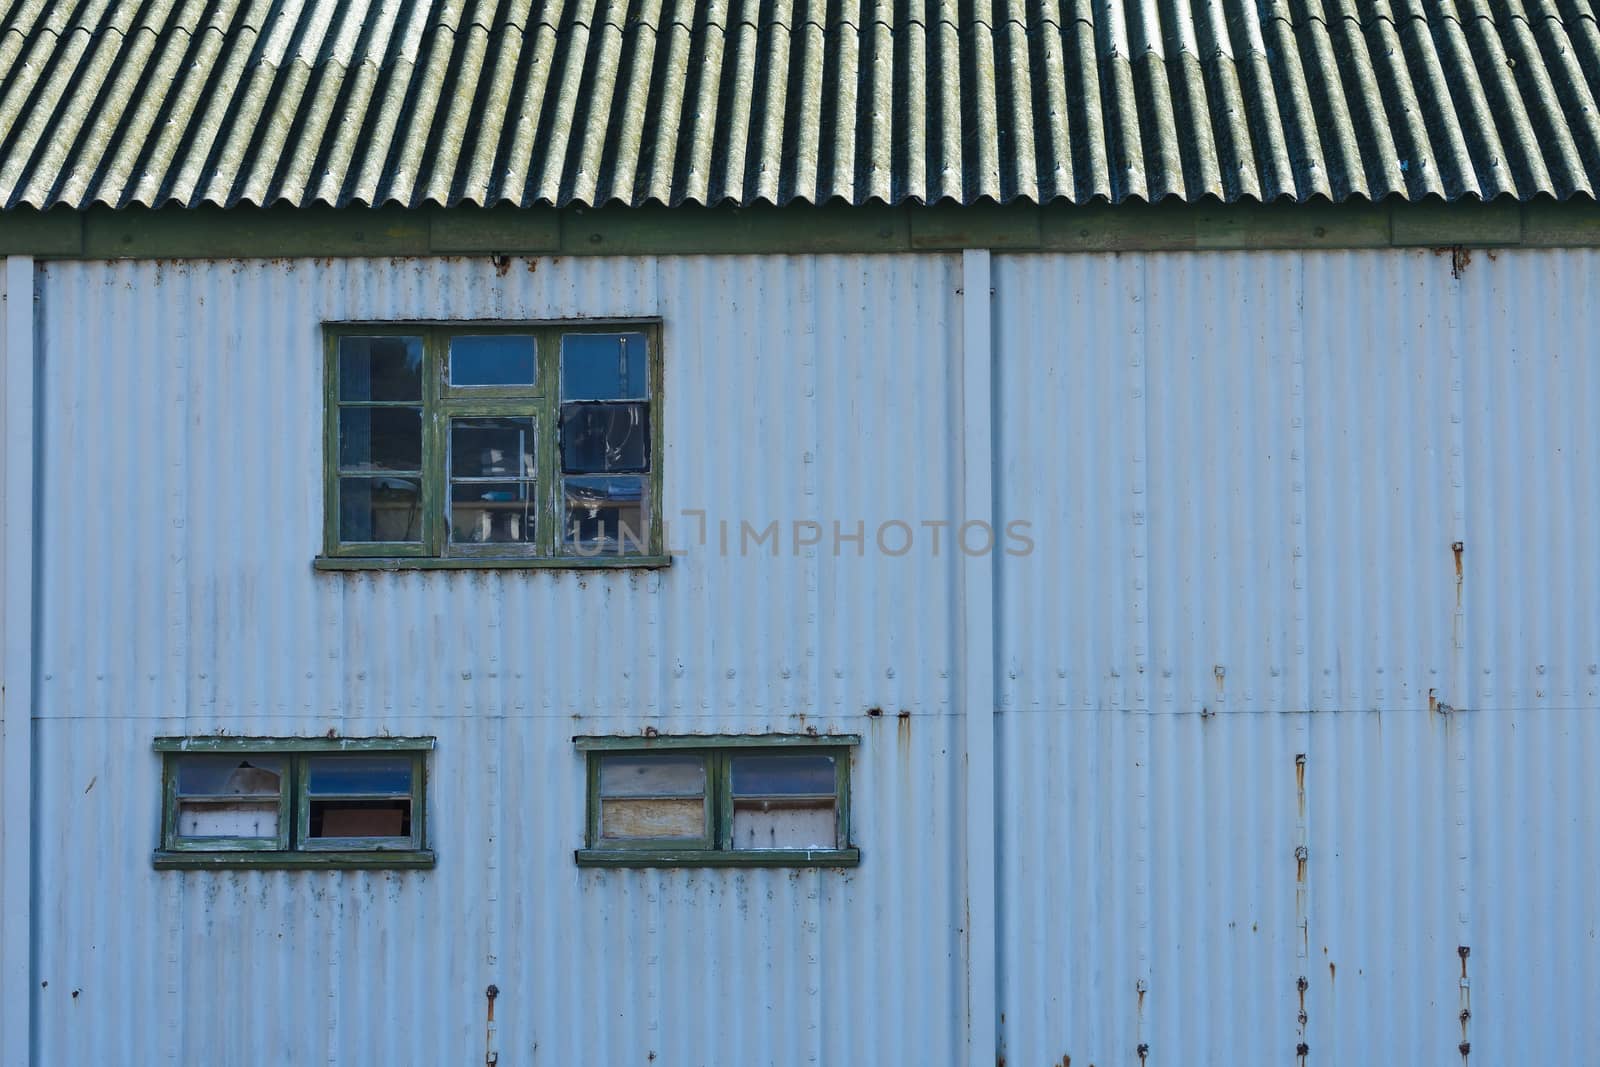 Old blue tin boathouse near the town wharf, Simon's Town, South Africa